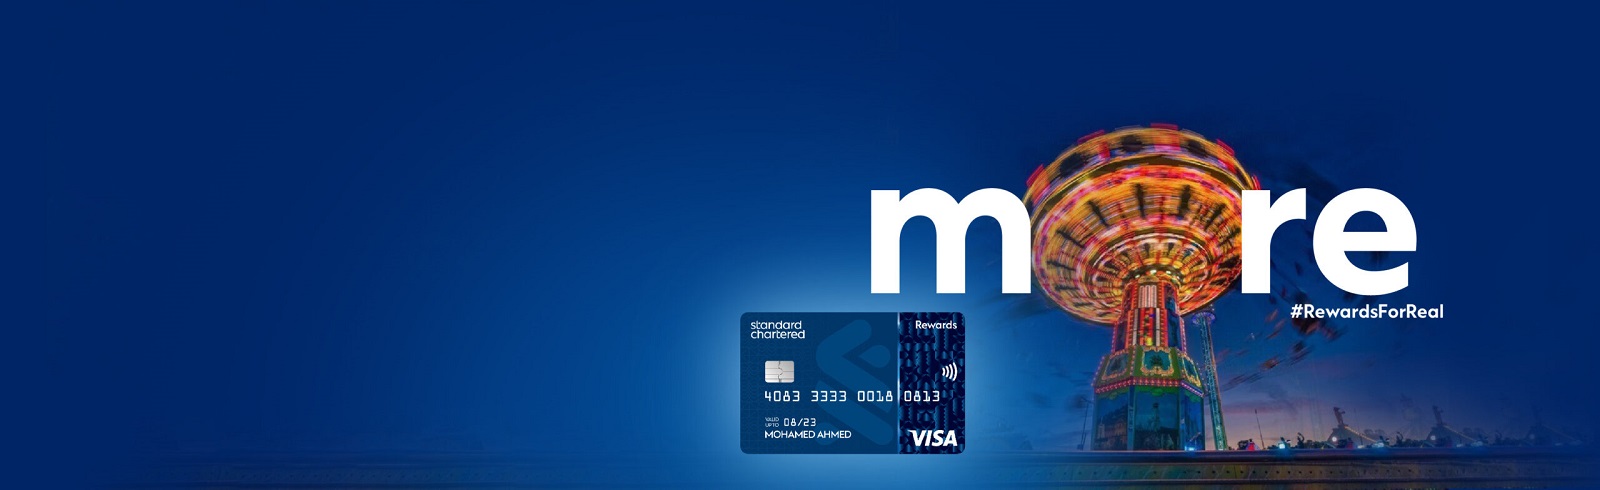 Rewards Credit Card by Standard Chartered Bank